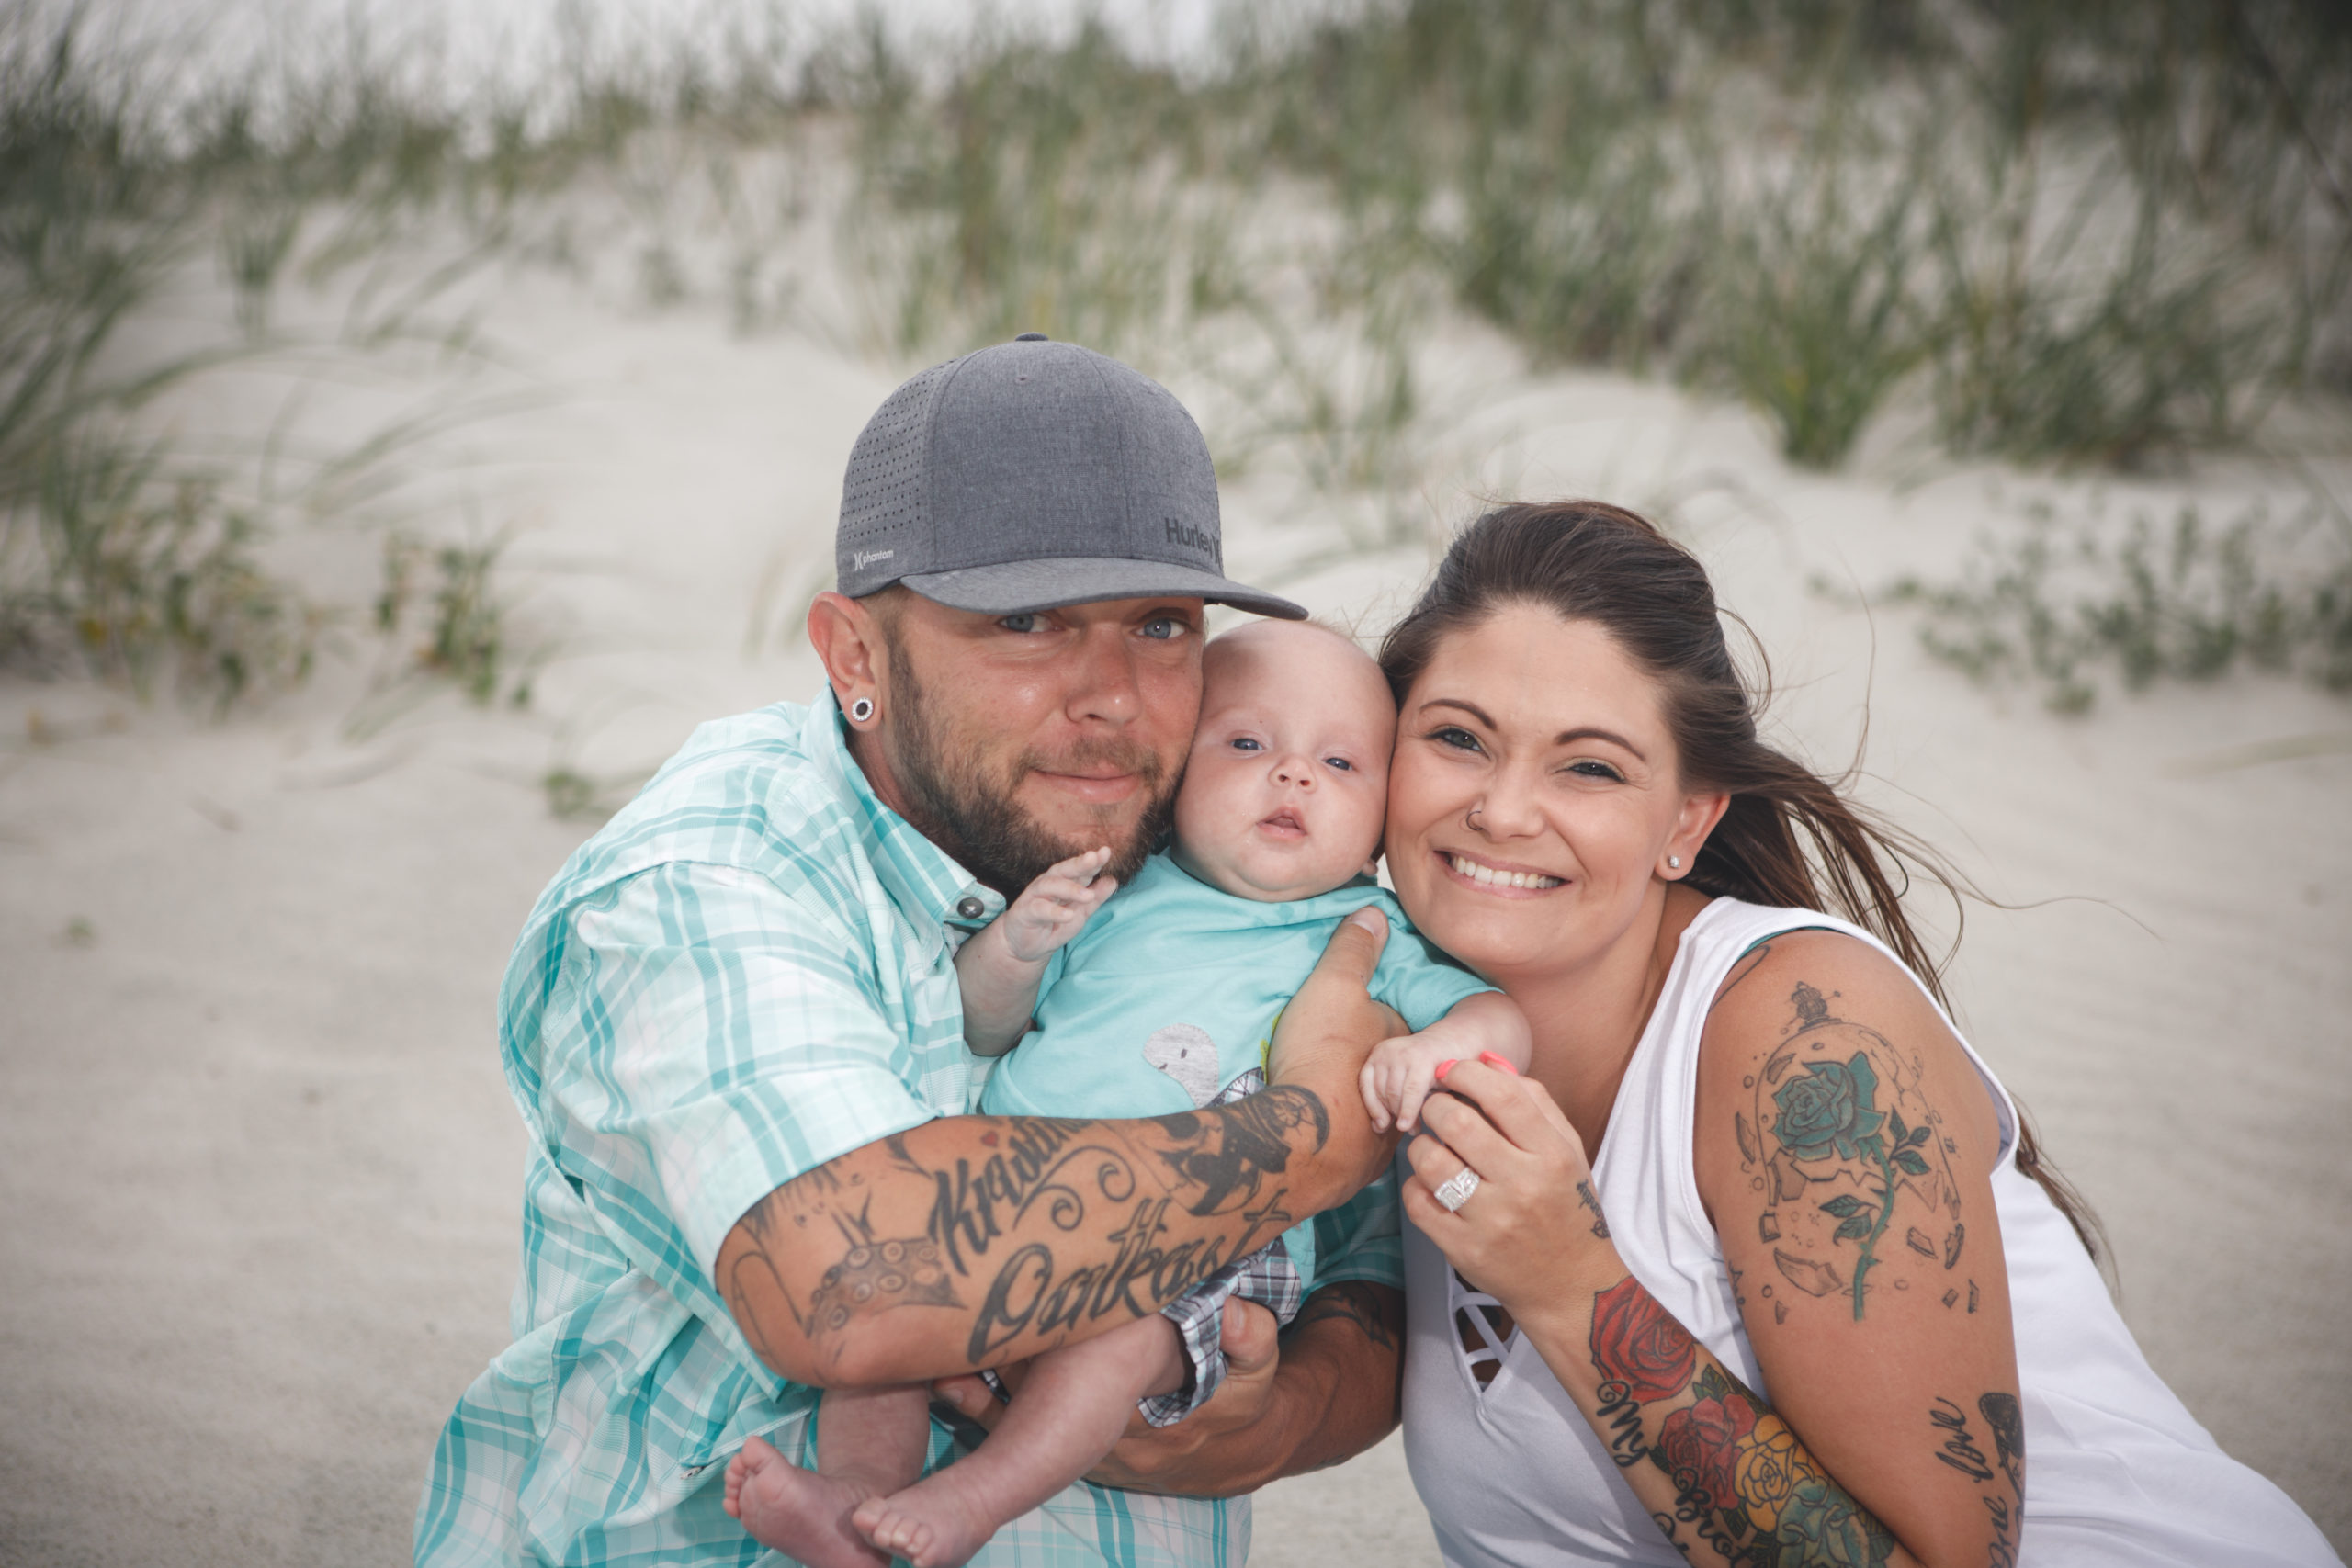 family photography myrtle beach